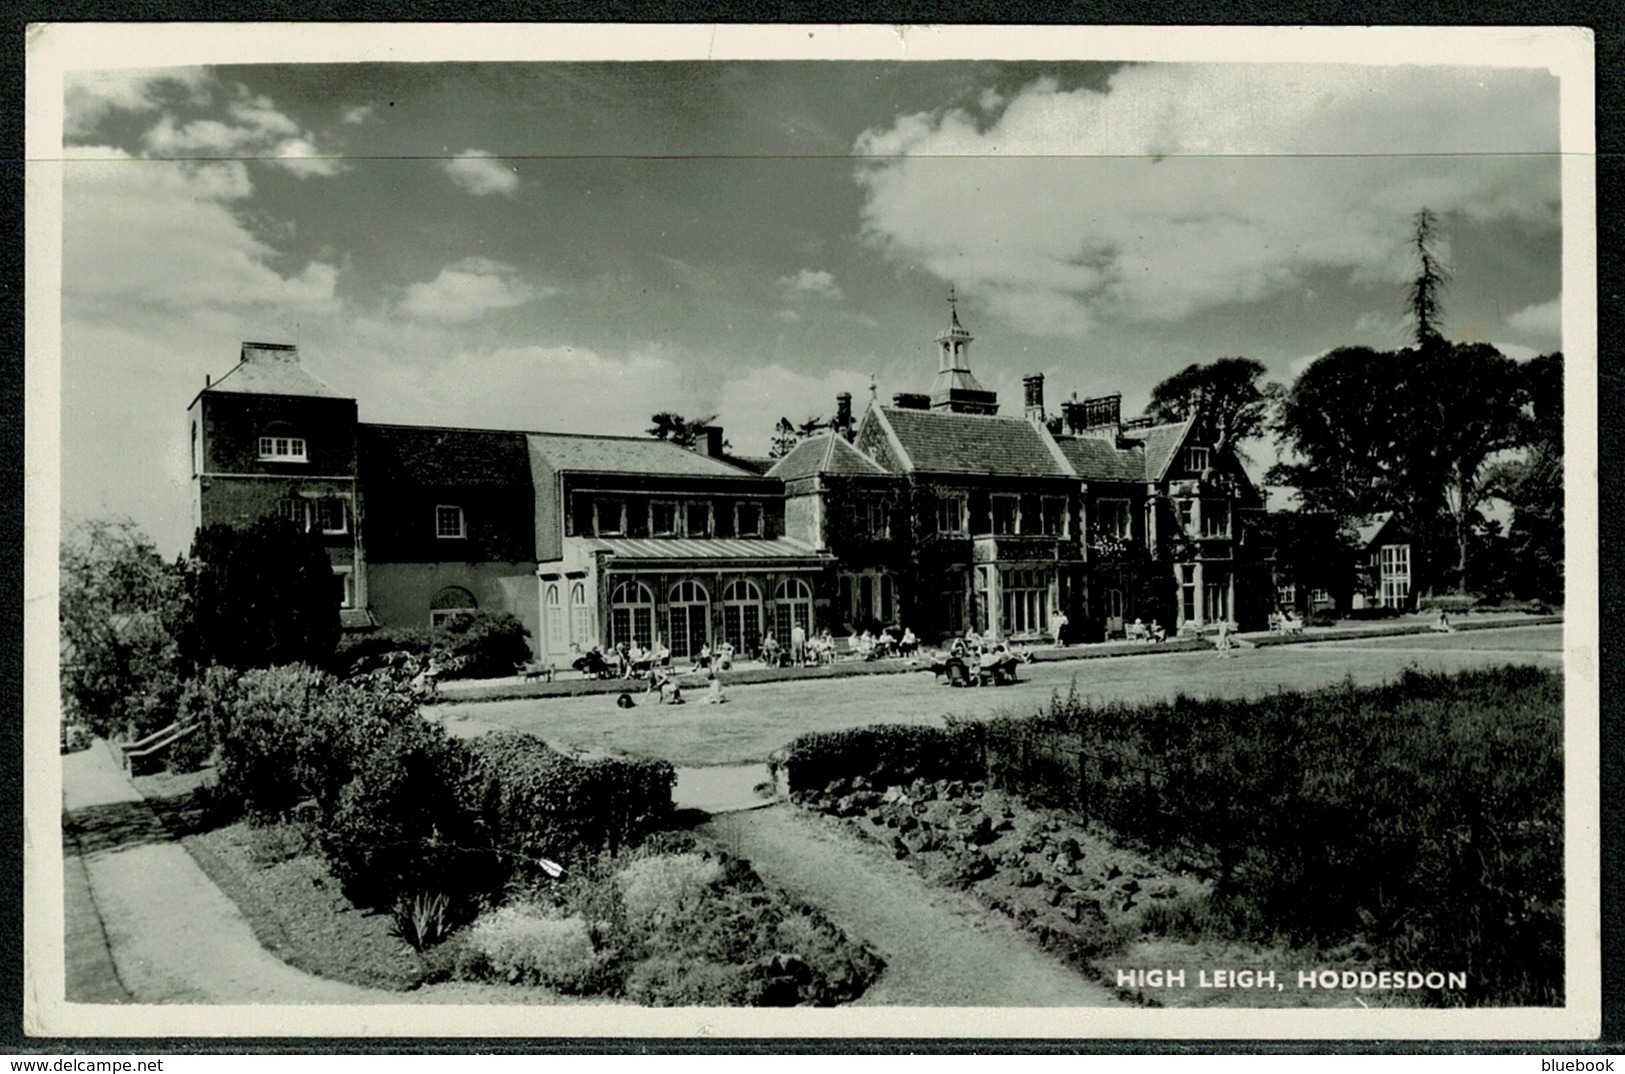 Ref 1298 - 1962 Real Photo Postcard - High Leigh - Hoddesdon Hertfordshire - Hertfordshire